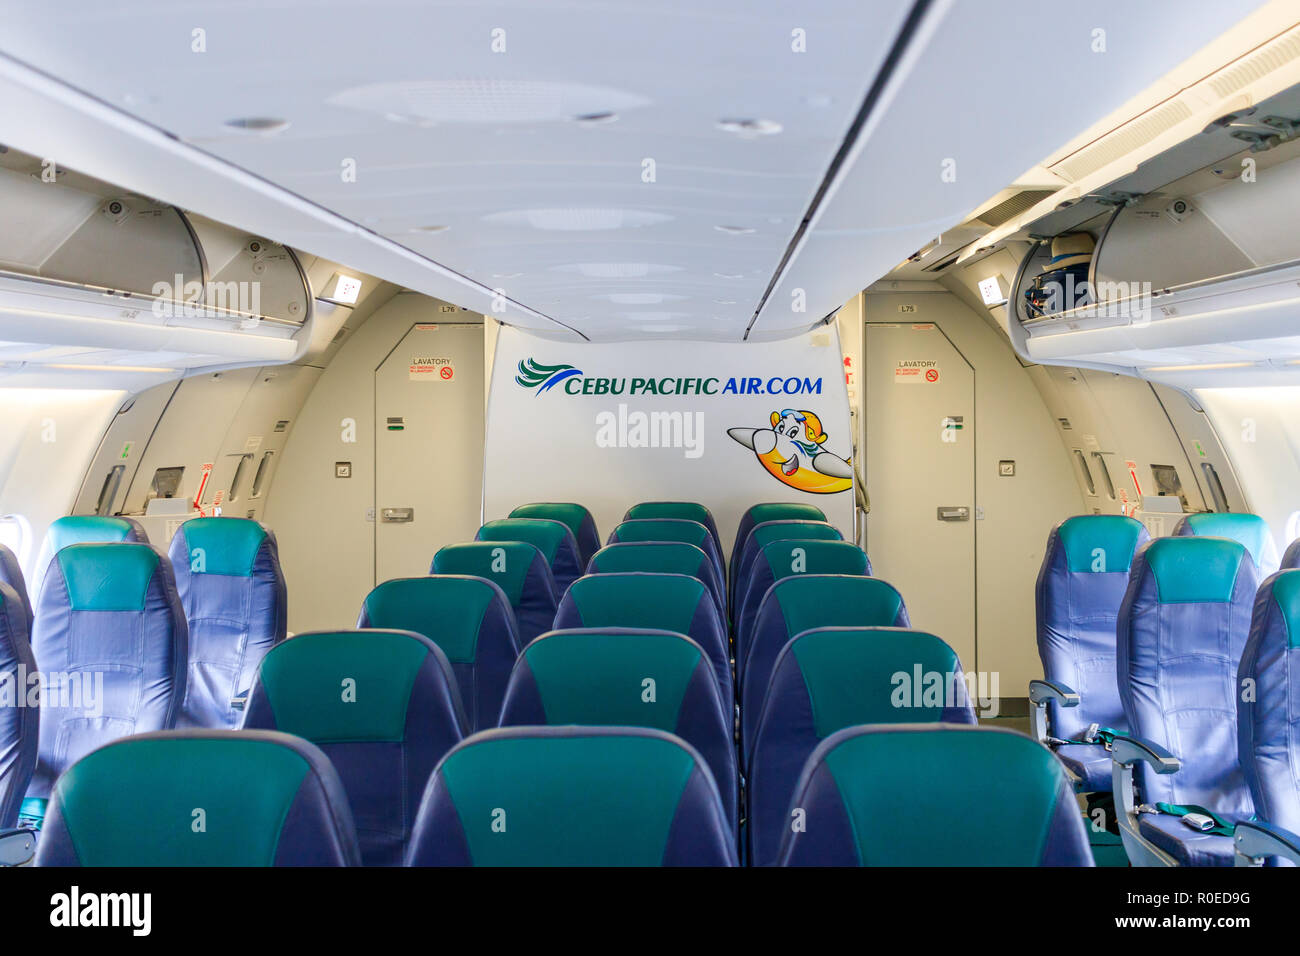 Inside Cebu Pacific Plane Stock Photo